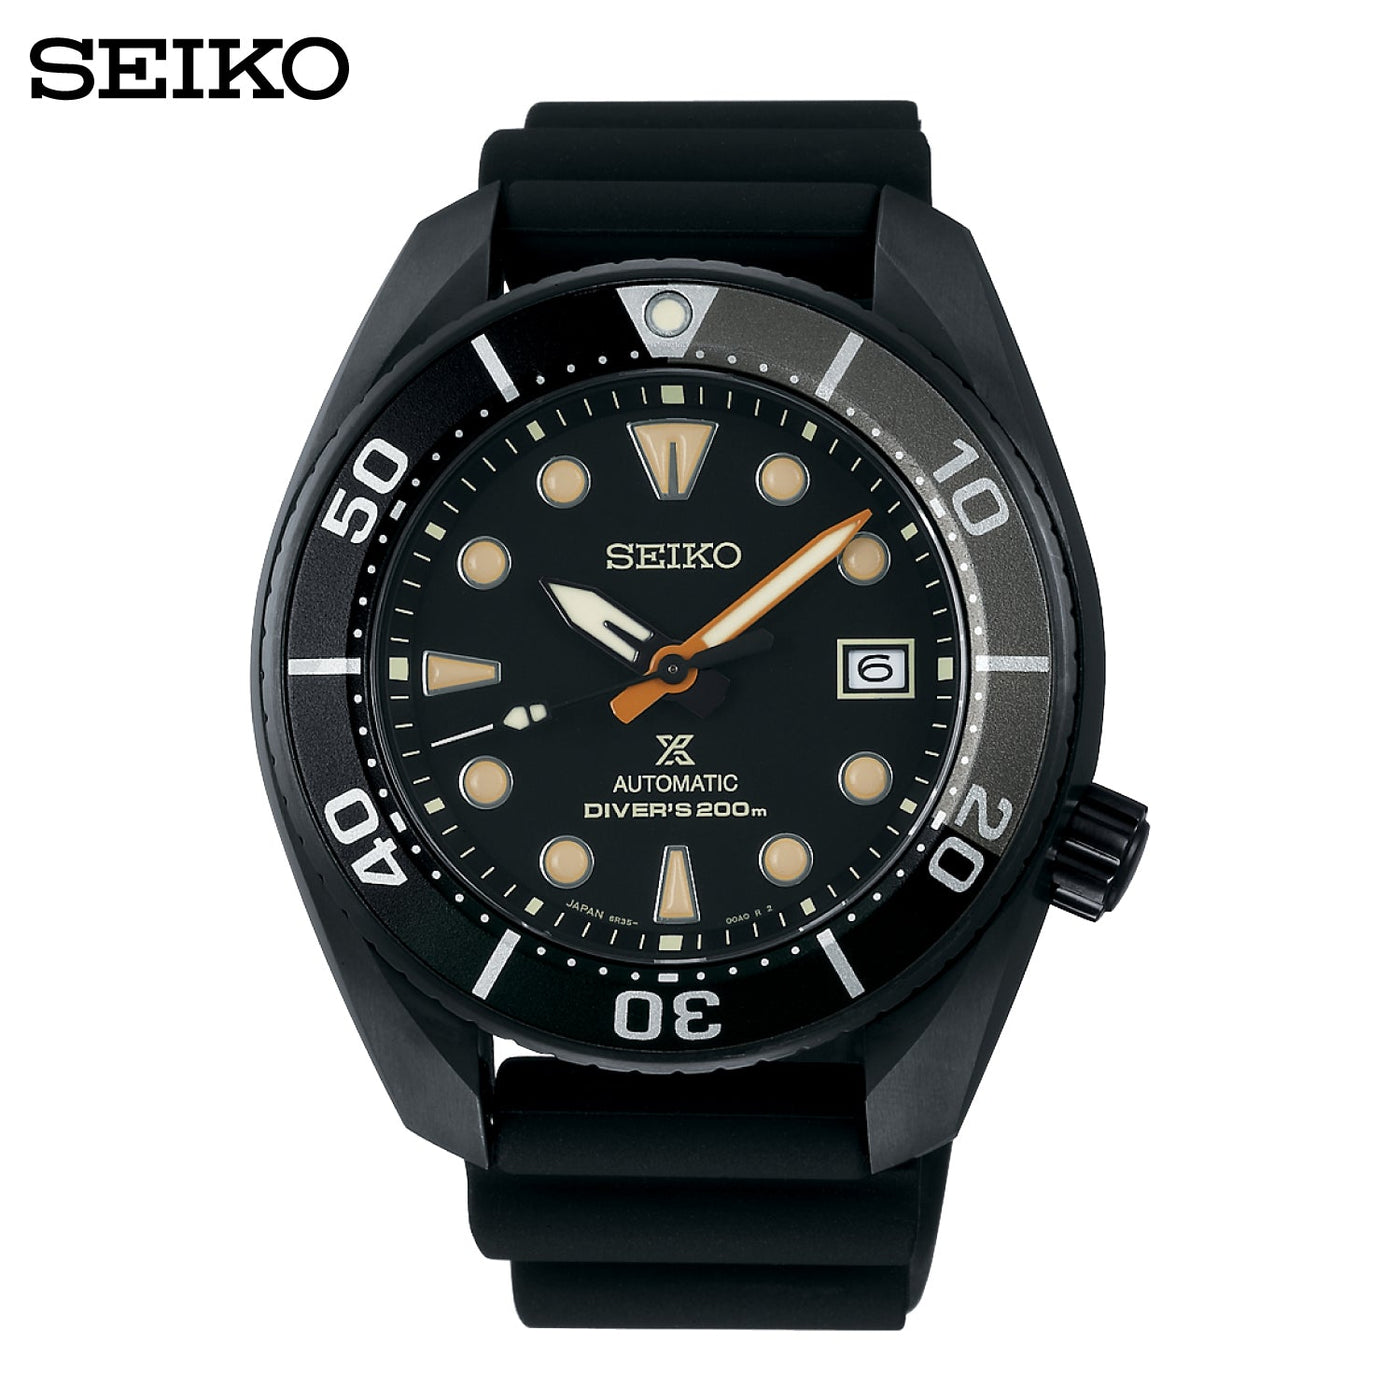 Seiko (ไซโก) นาฬิกาข้อมือ รุ่น Prospex Sumo Black Series Limited Edition SPB125J ระบบอัตโนมัติ ขนาดตัวเรือน 45 มม.